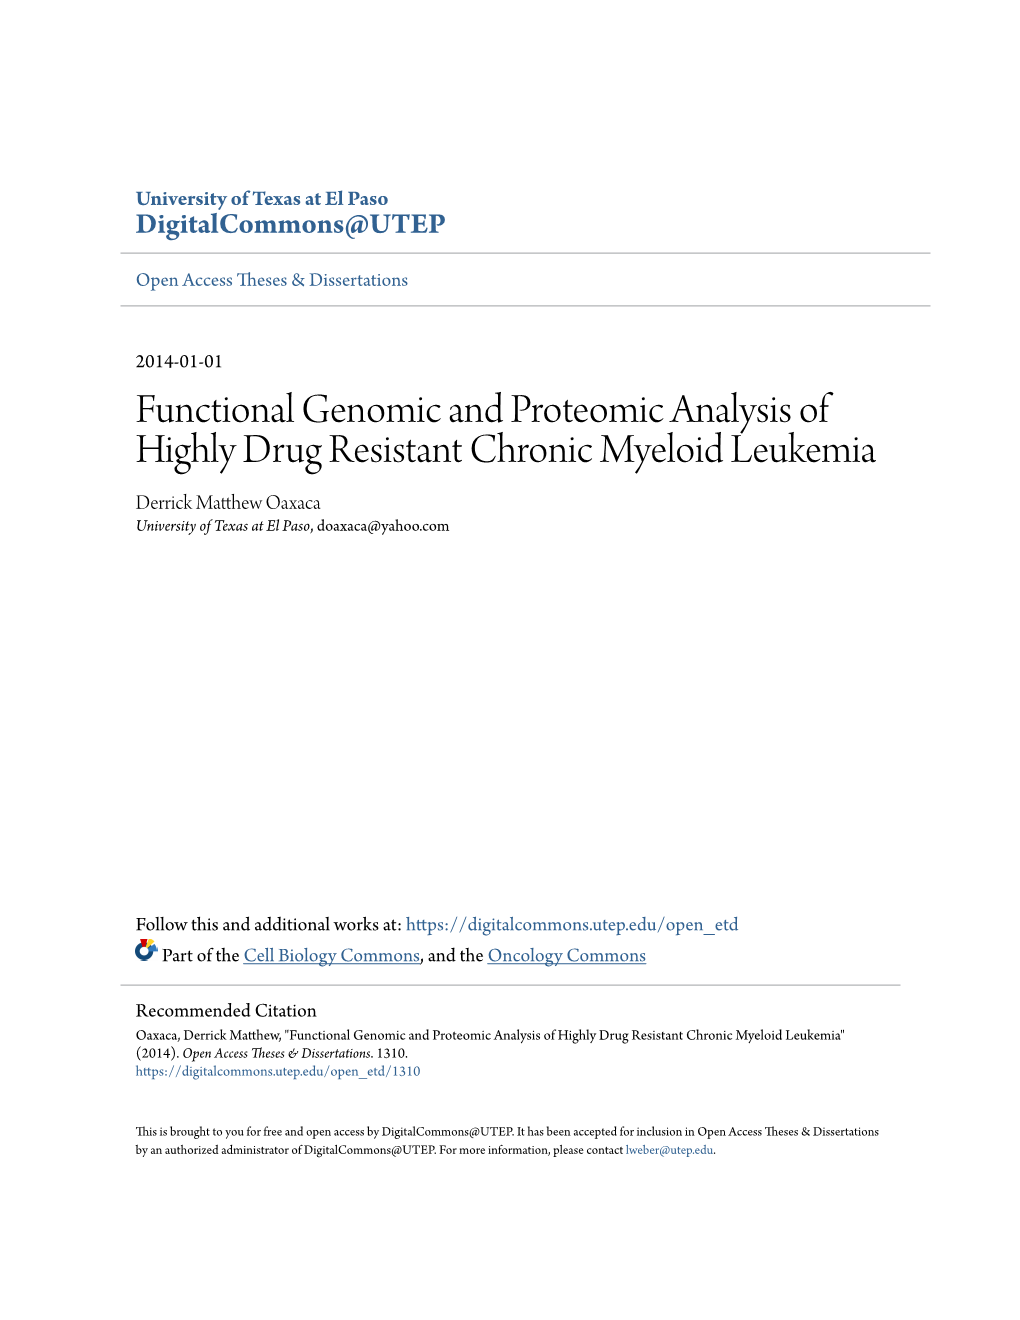 Functional Genomic and Proteomic Analysis of Highly Drug Resistant Chronic Myeloid Leukemia Derrick Matthew Ao Xaca University of Texas at El Paso, Doaxaca@Yahoo.Com